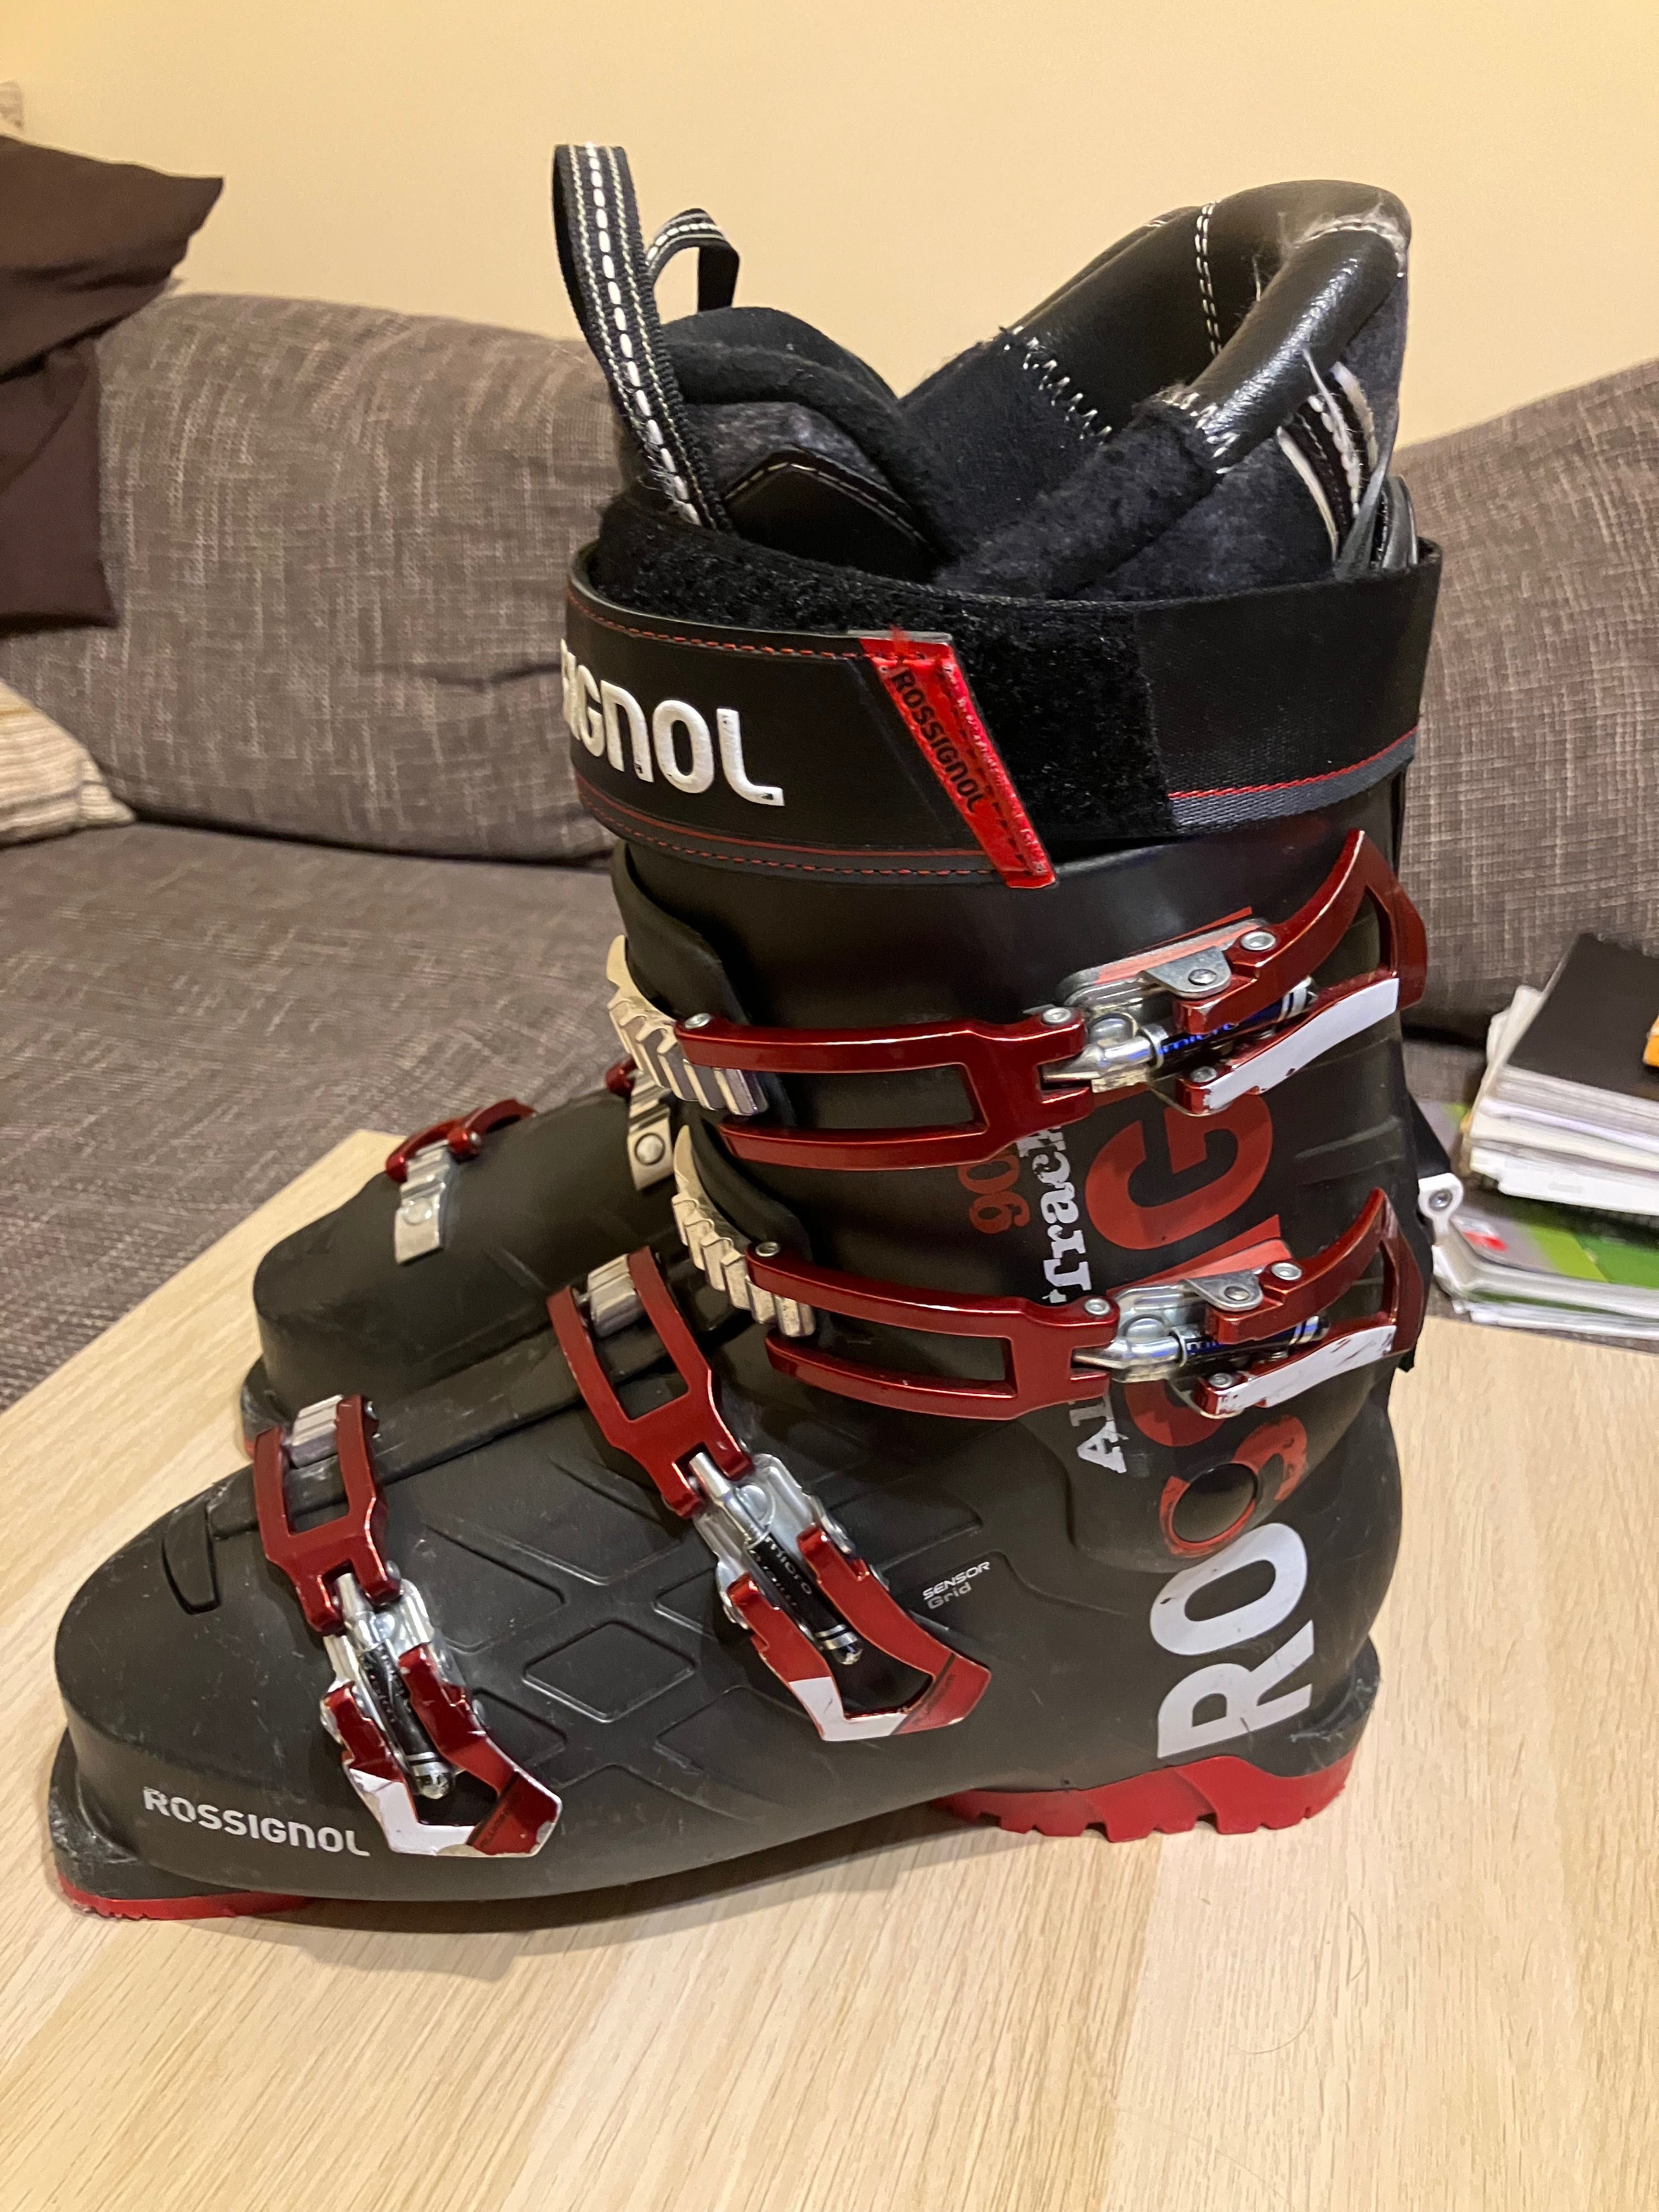 Ски Atomic XT 163 и ски обувки Rossignol All Track 90